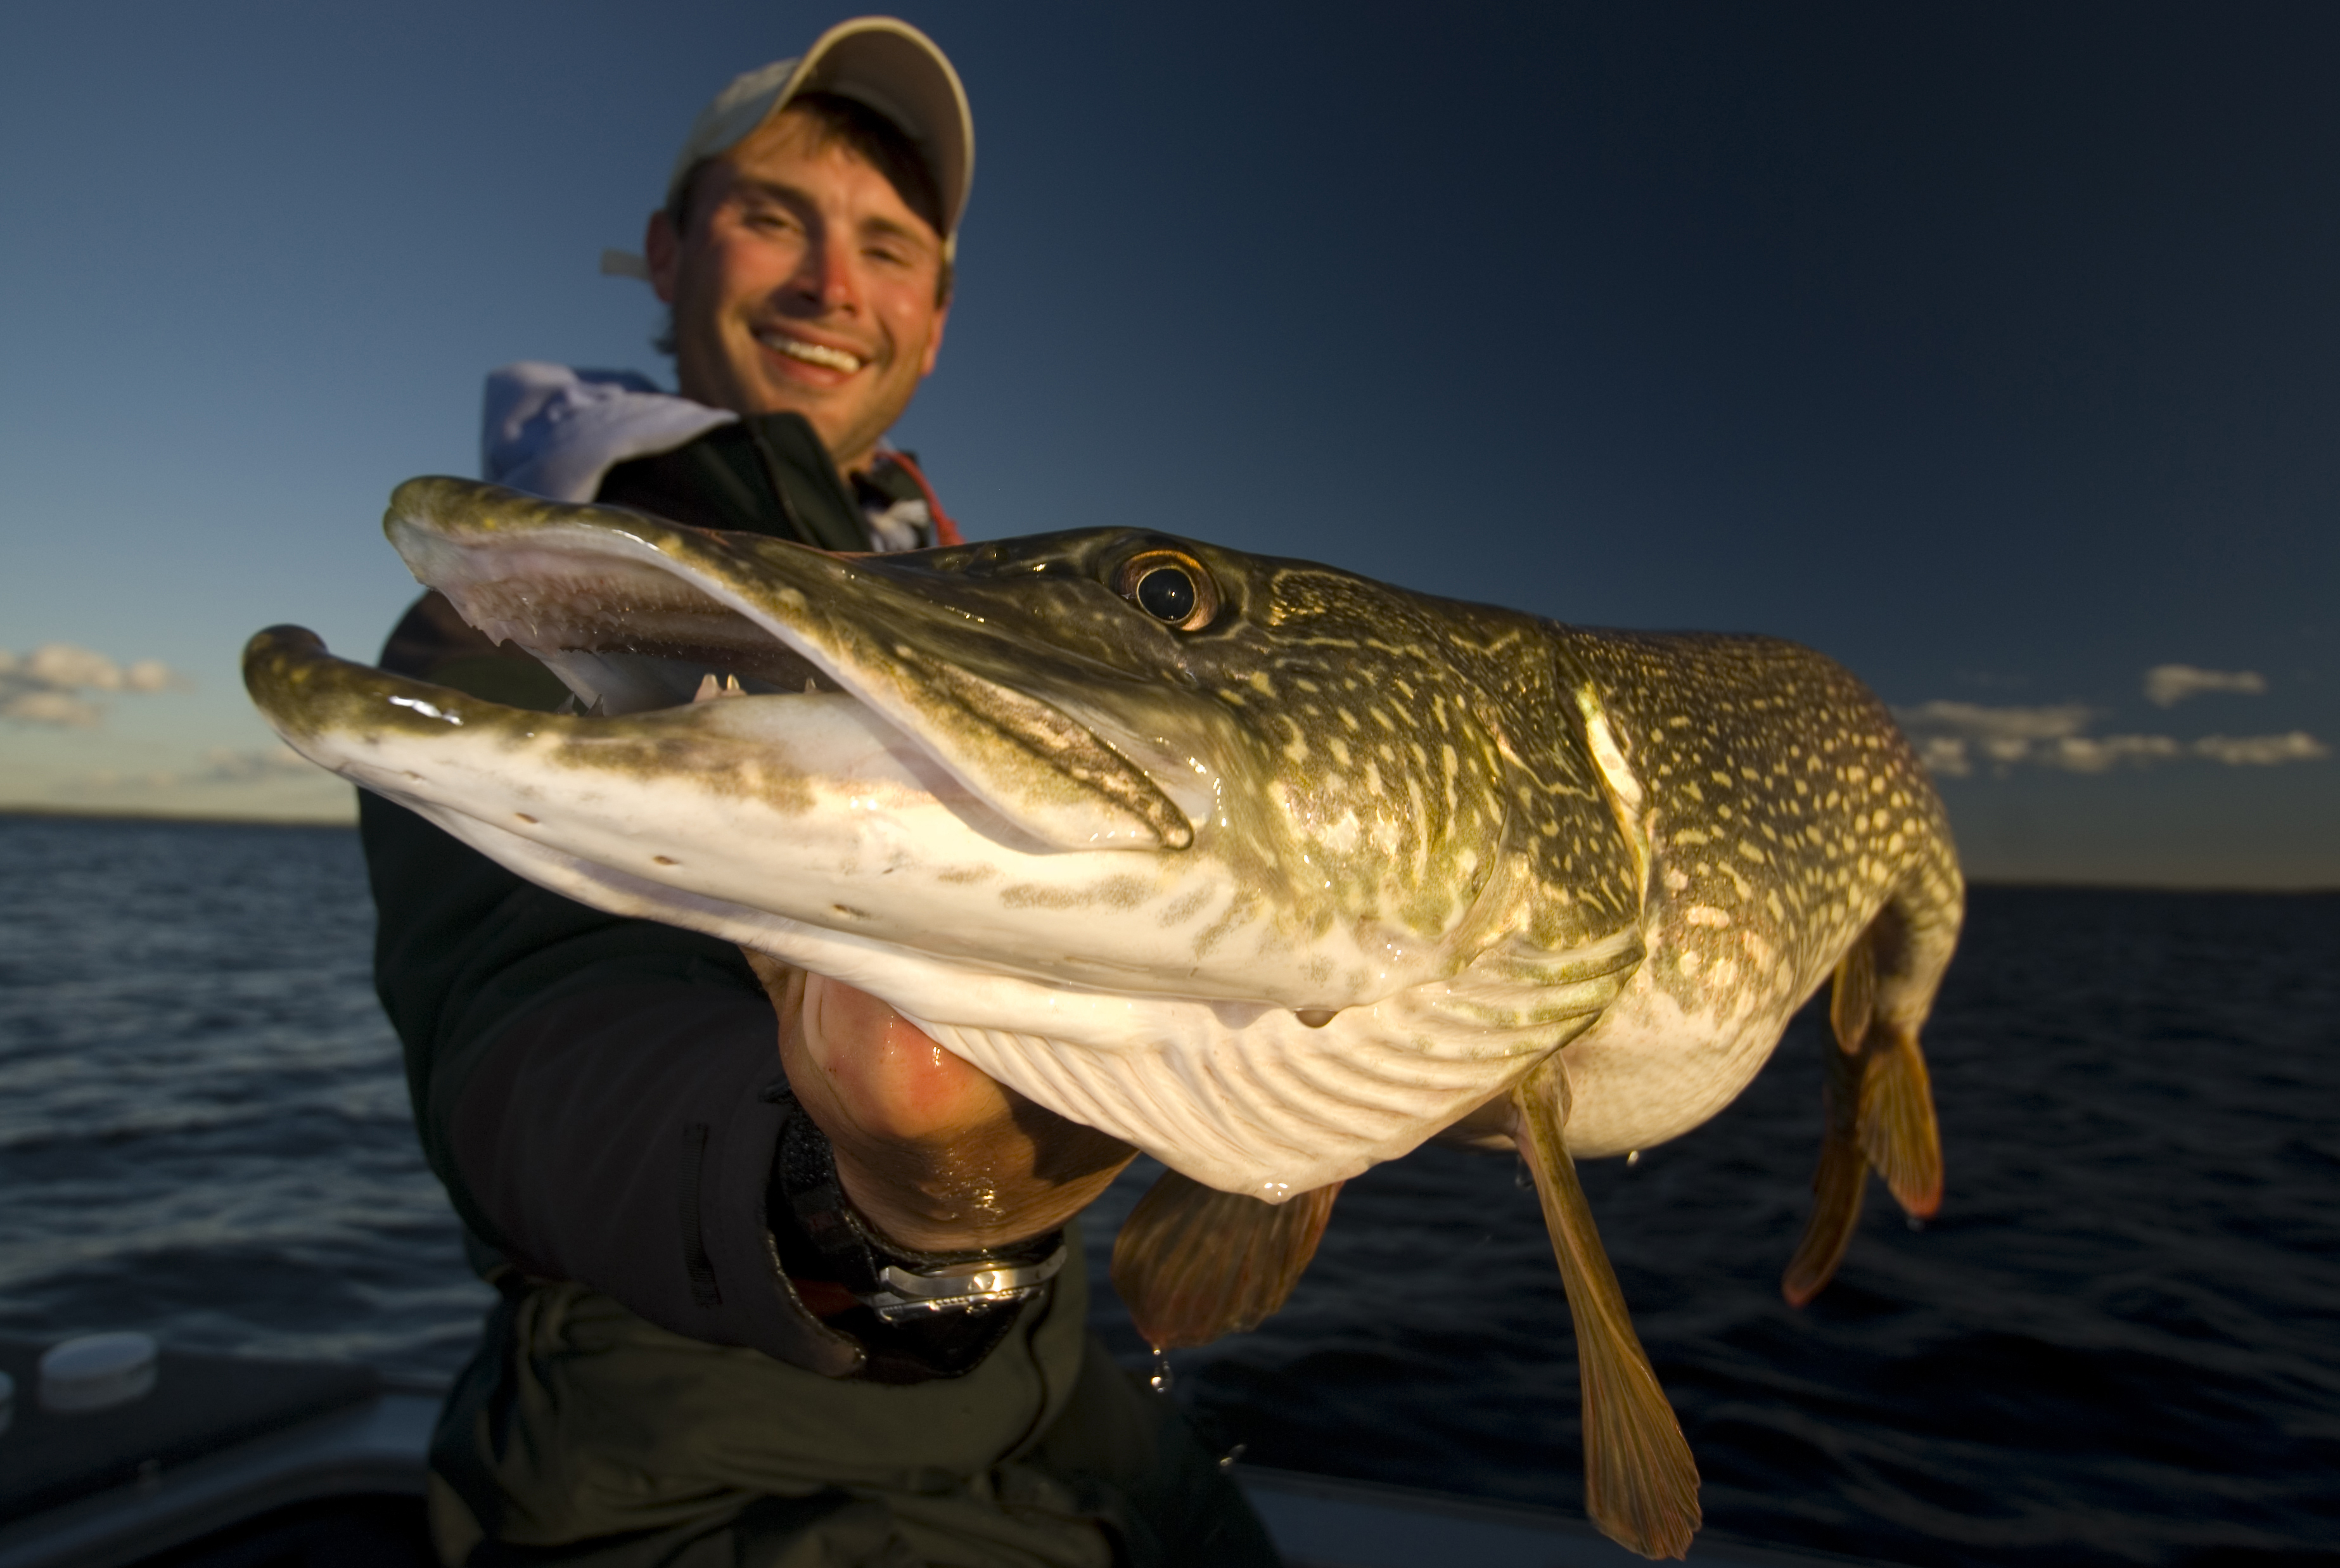 Northern Pike Fishing Trips in Ontario, Canada